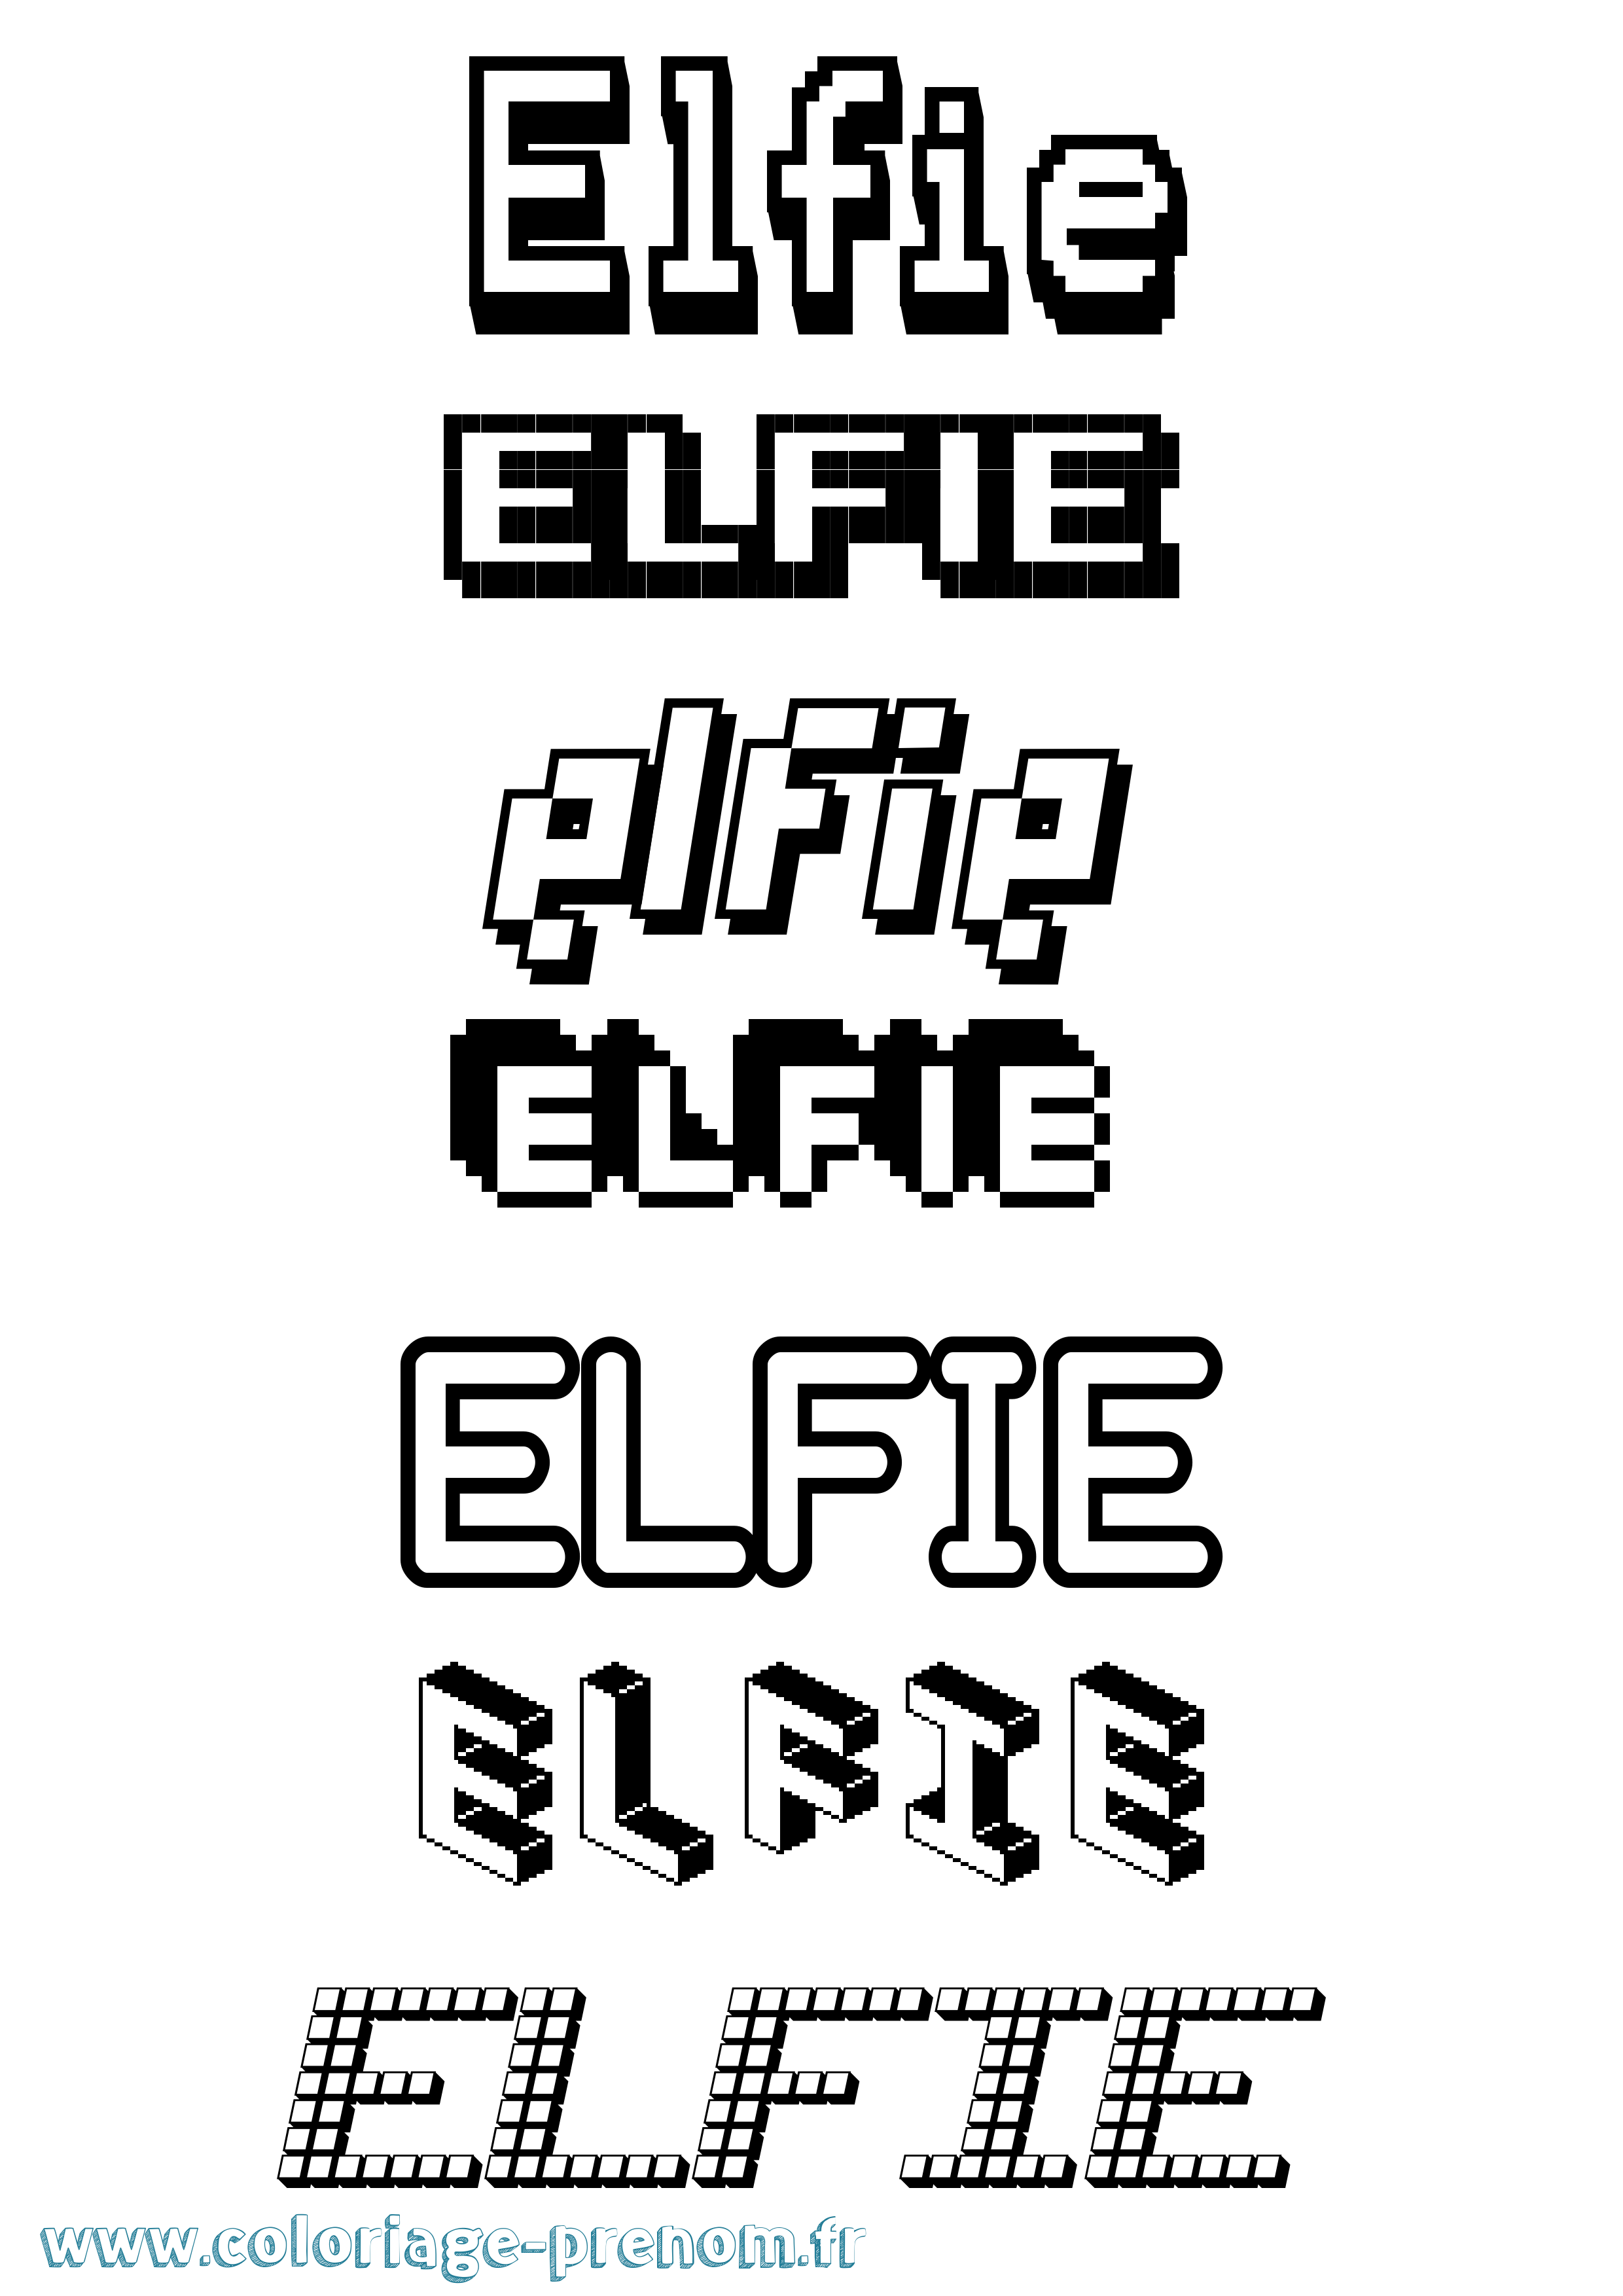 Coloriage prénom Elfie Pixel